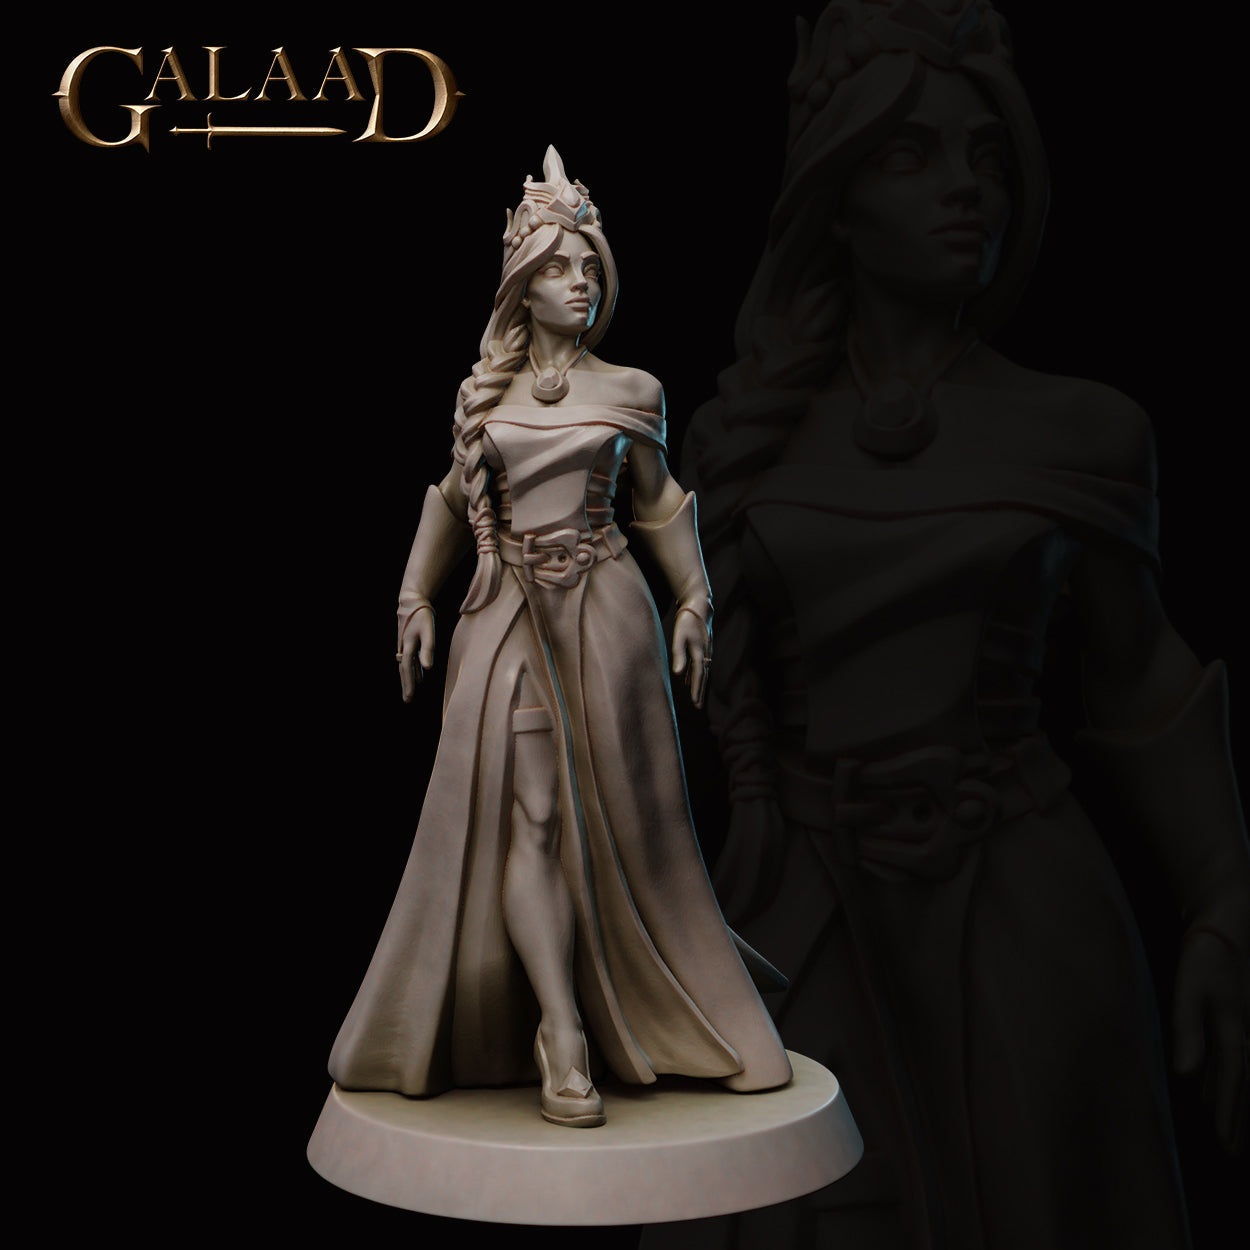 Queen | Escort the Queen | Fantasy Miniature | Galaad Miniatures TabletopXtra